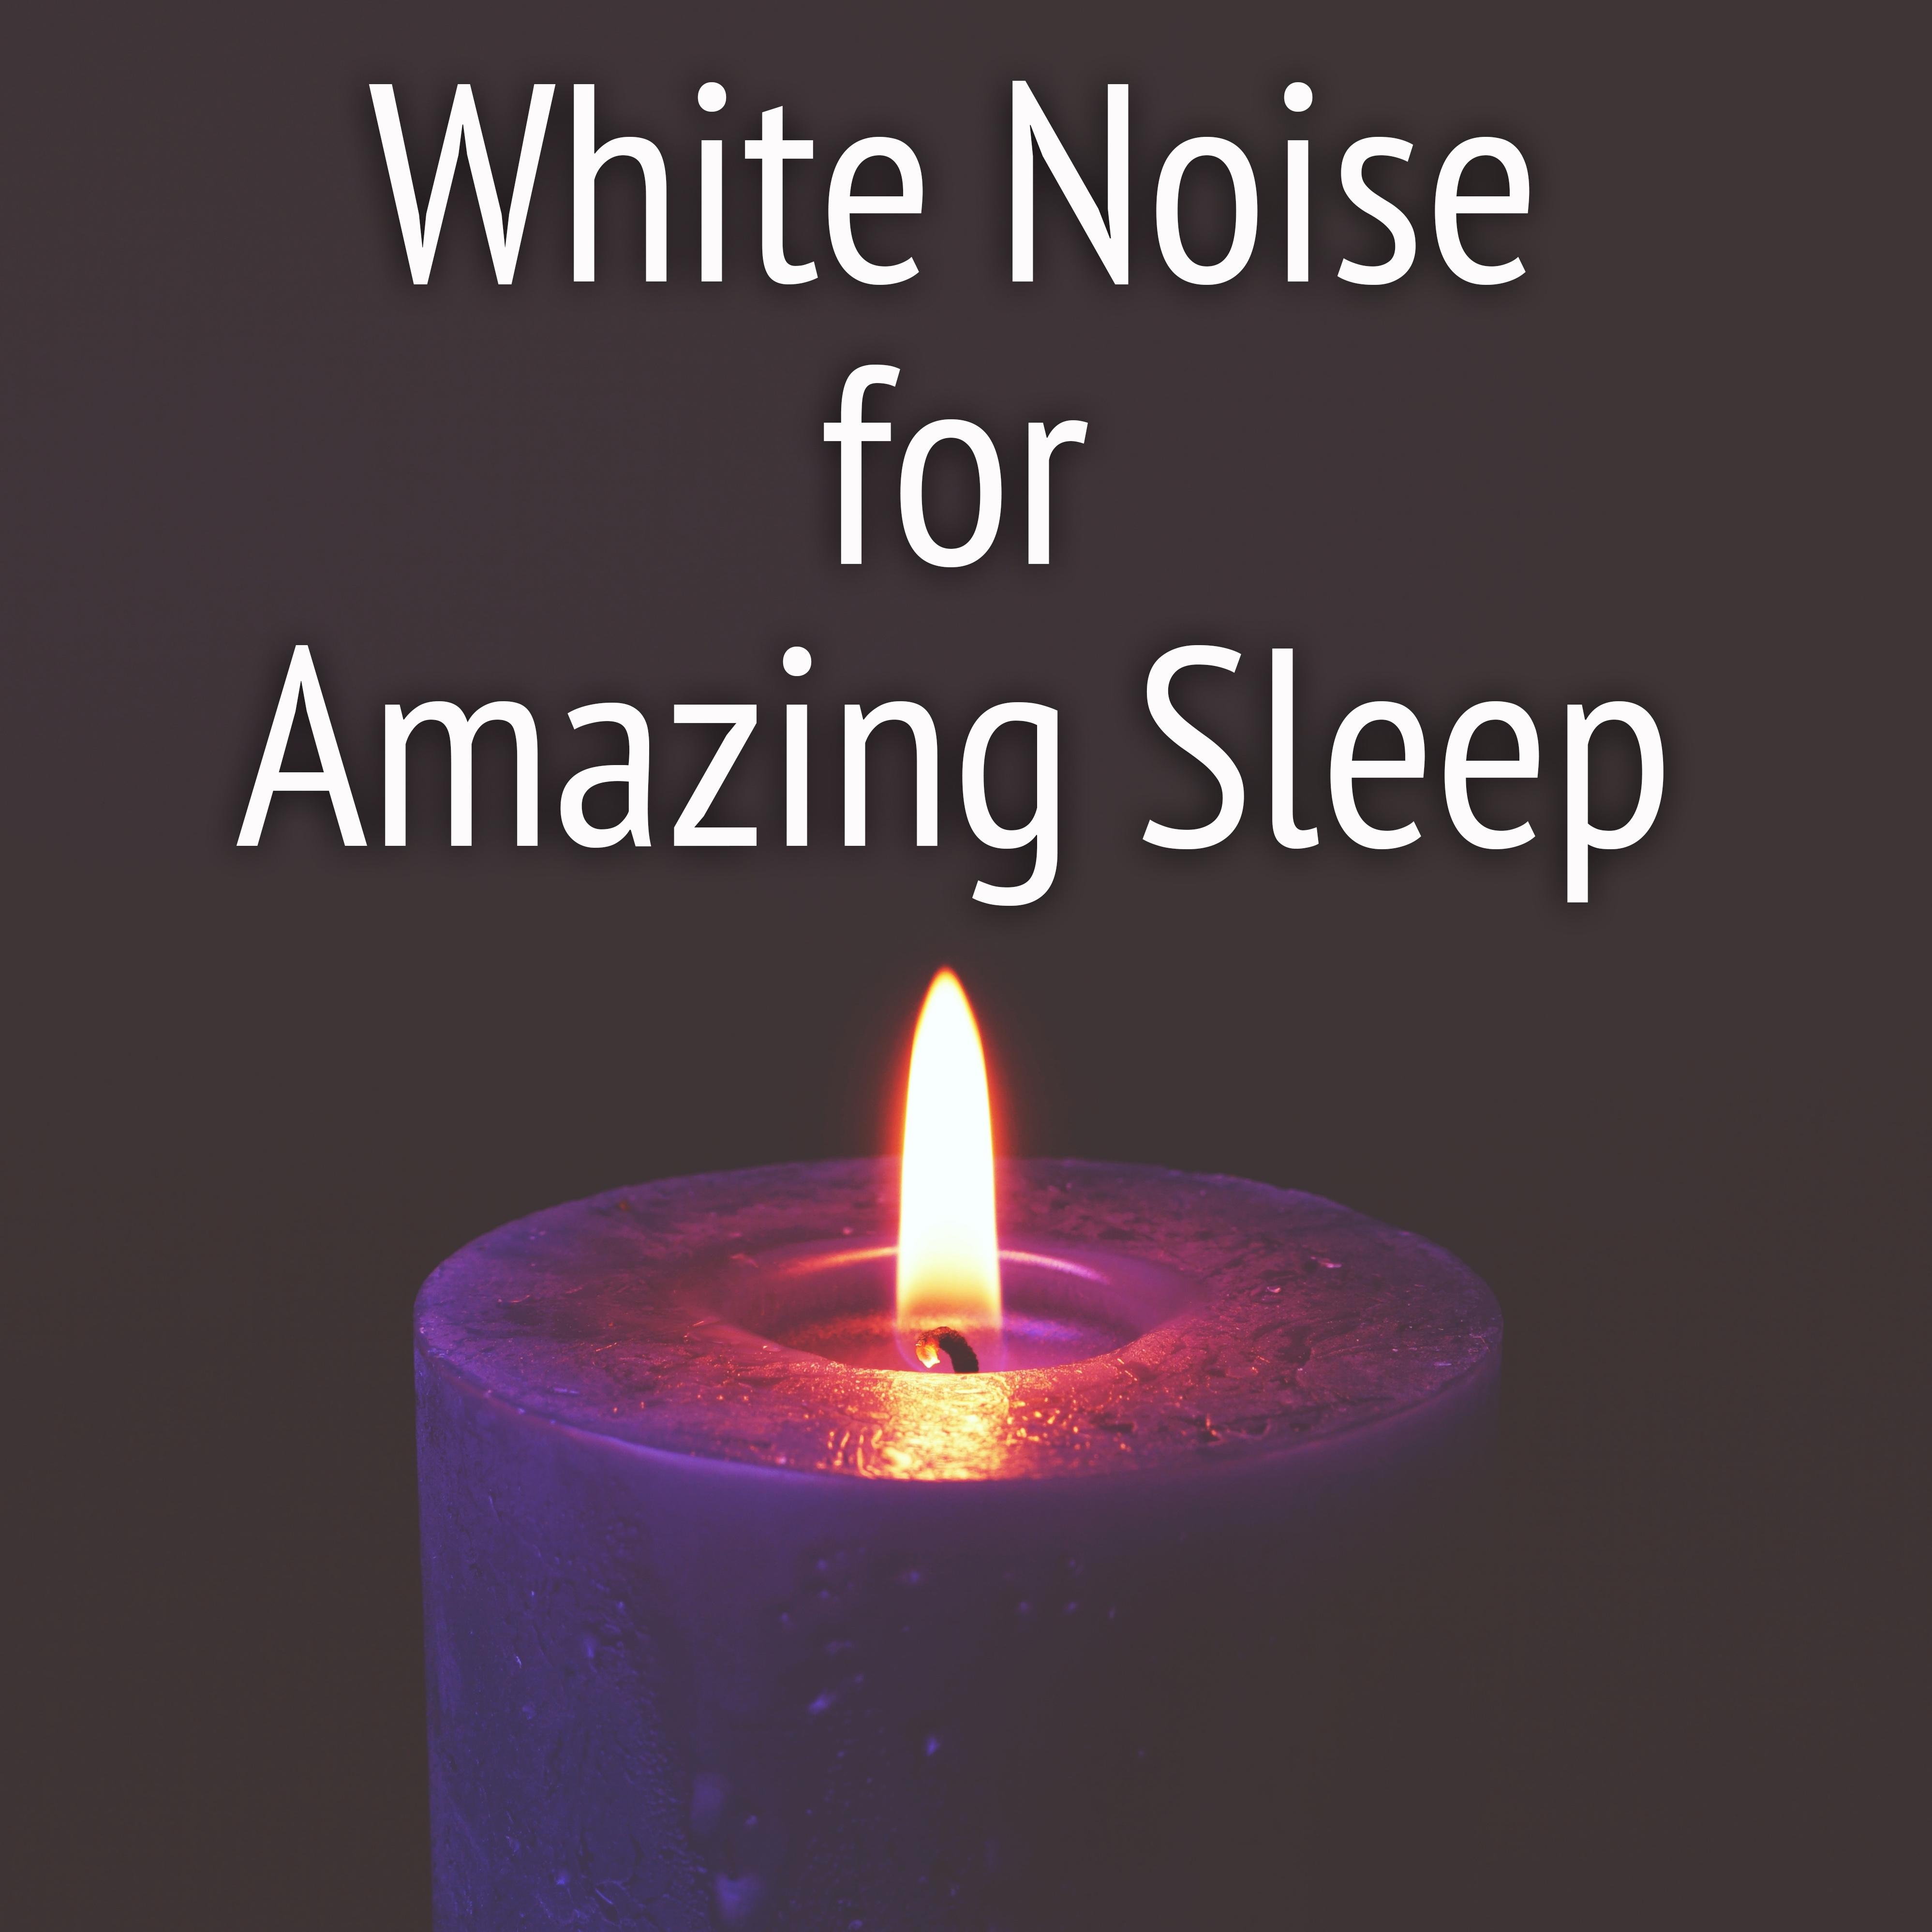 10 White Noise Sounds for Sleep. Real Rain Sounds for Amazing Sleep